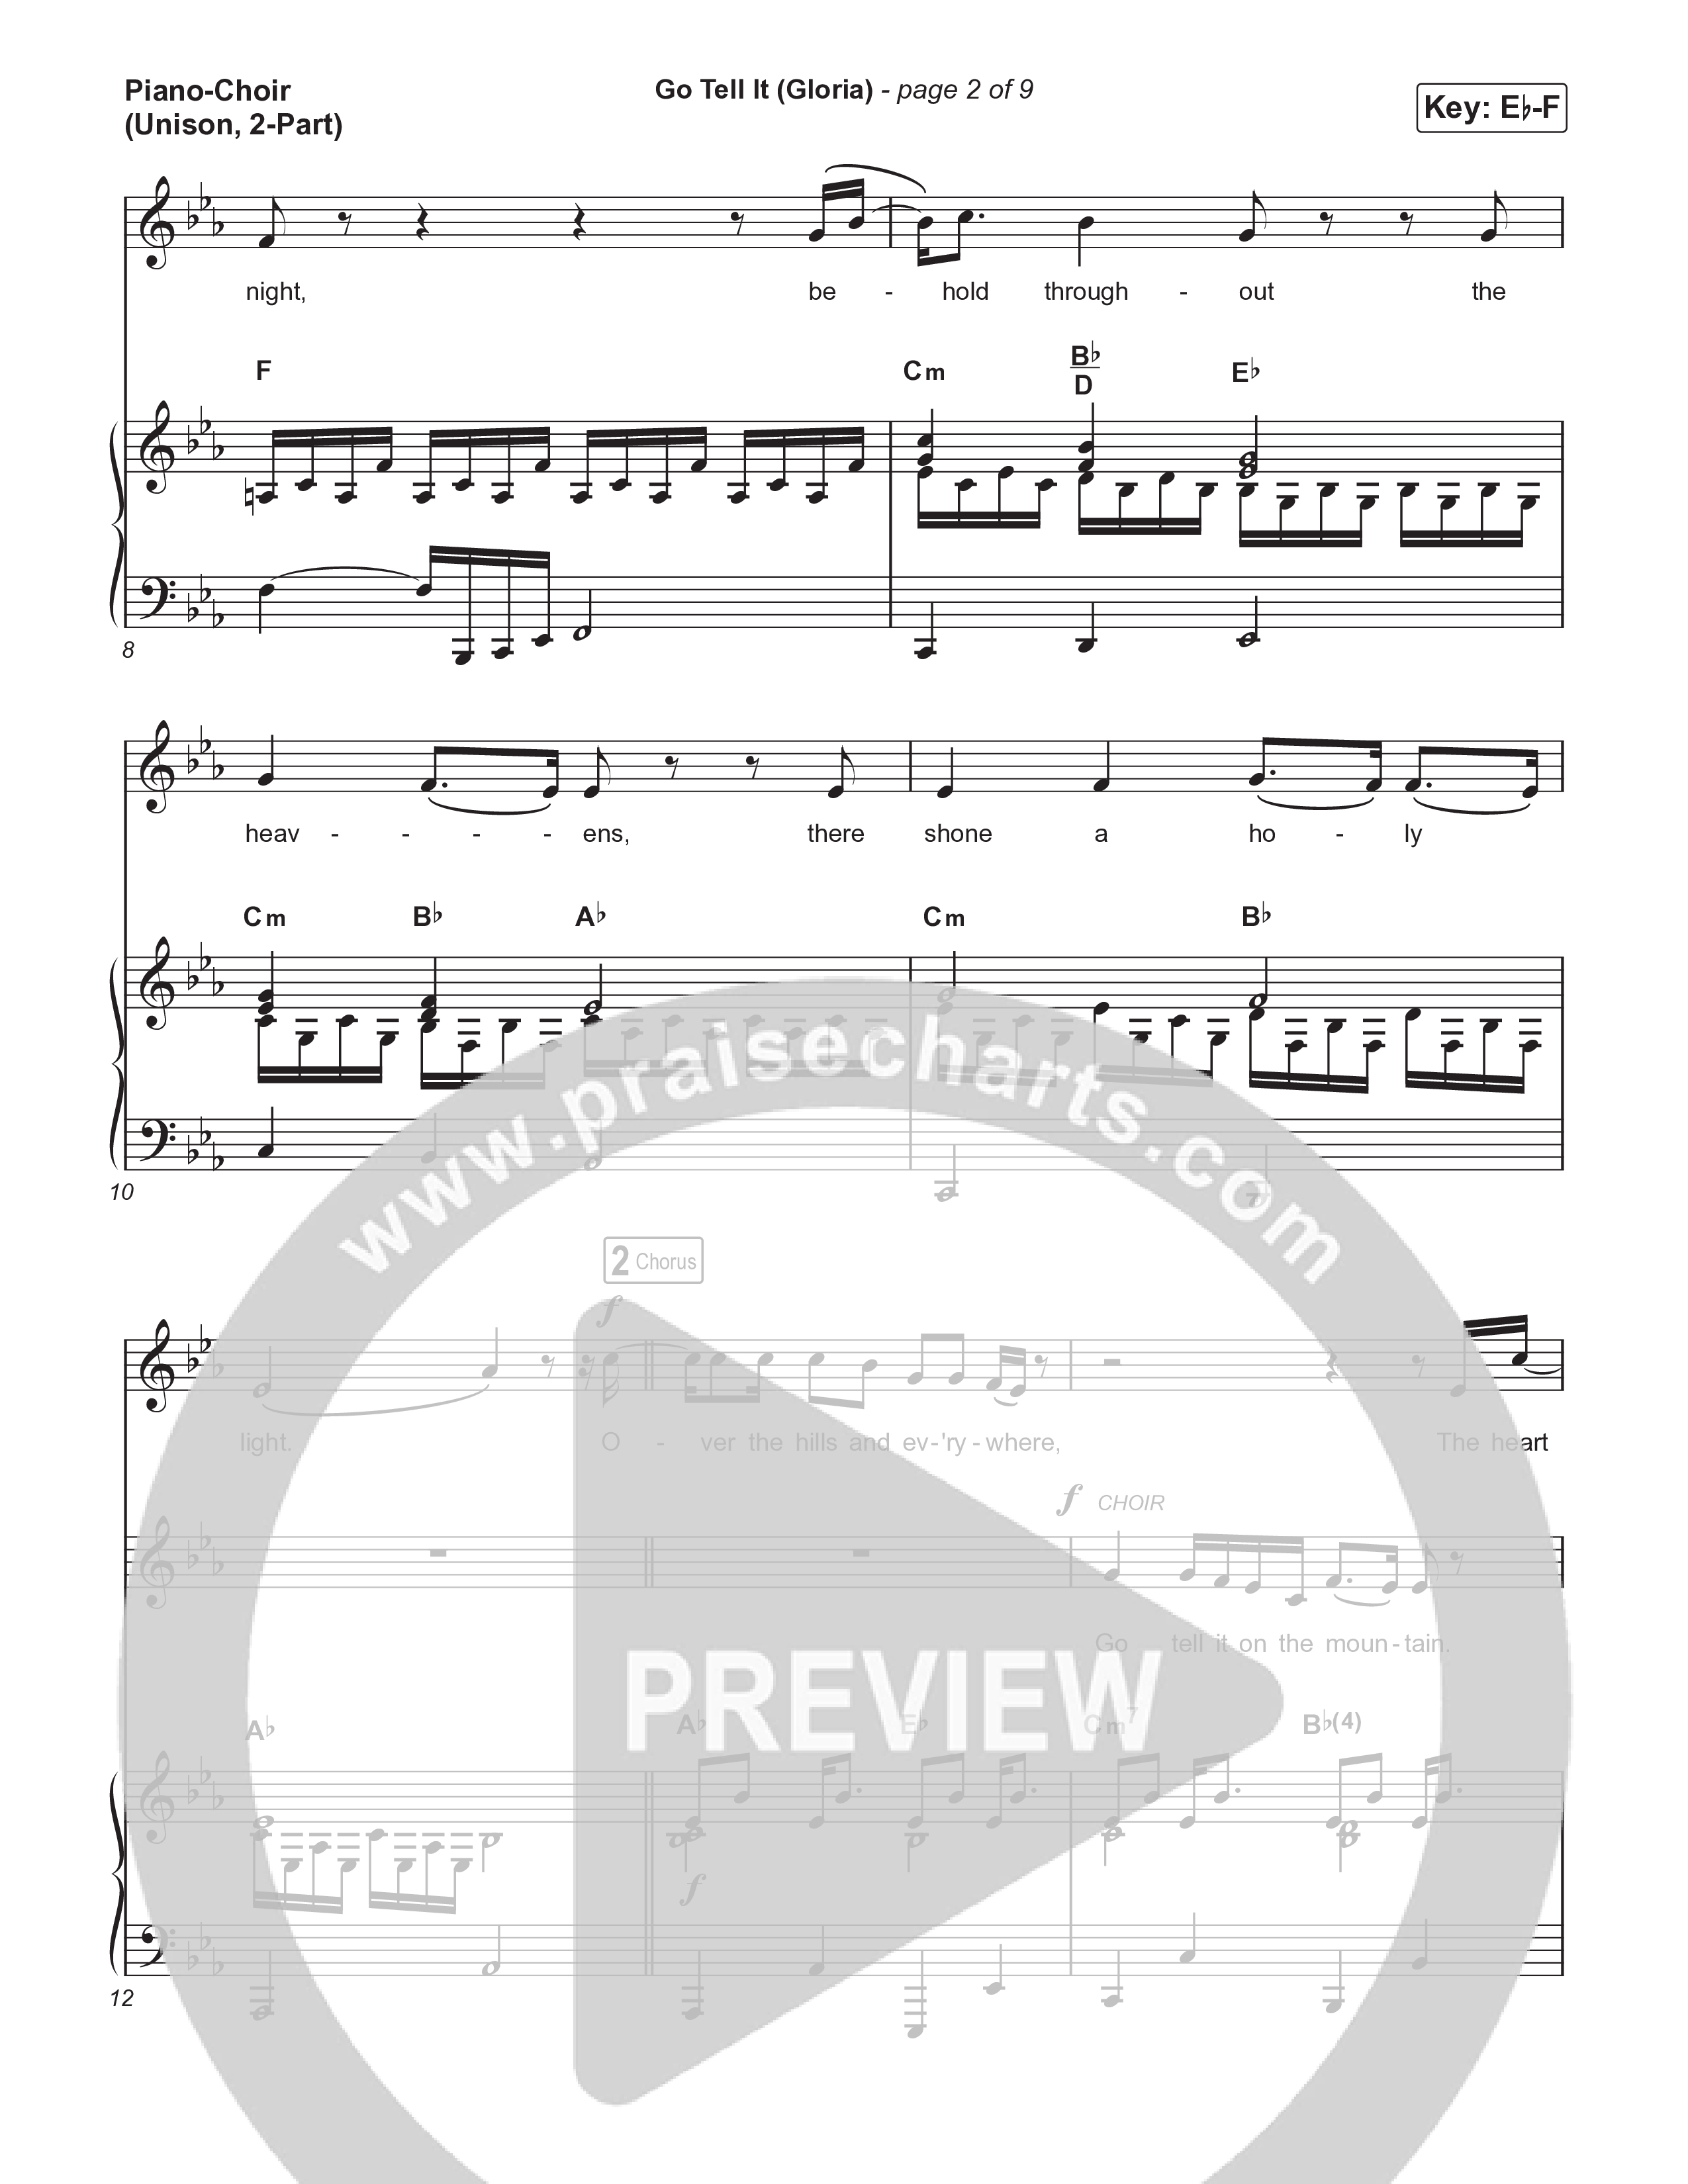 Go Tell It (Gloria) (Unison/2-Part) Piano/Choir  (Uni/2-Part) (Matt Maher / Arr. Luke Gambill)